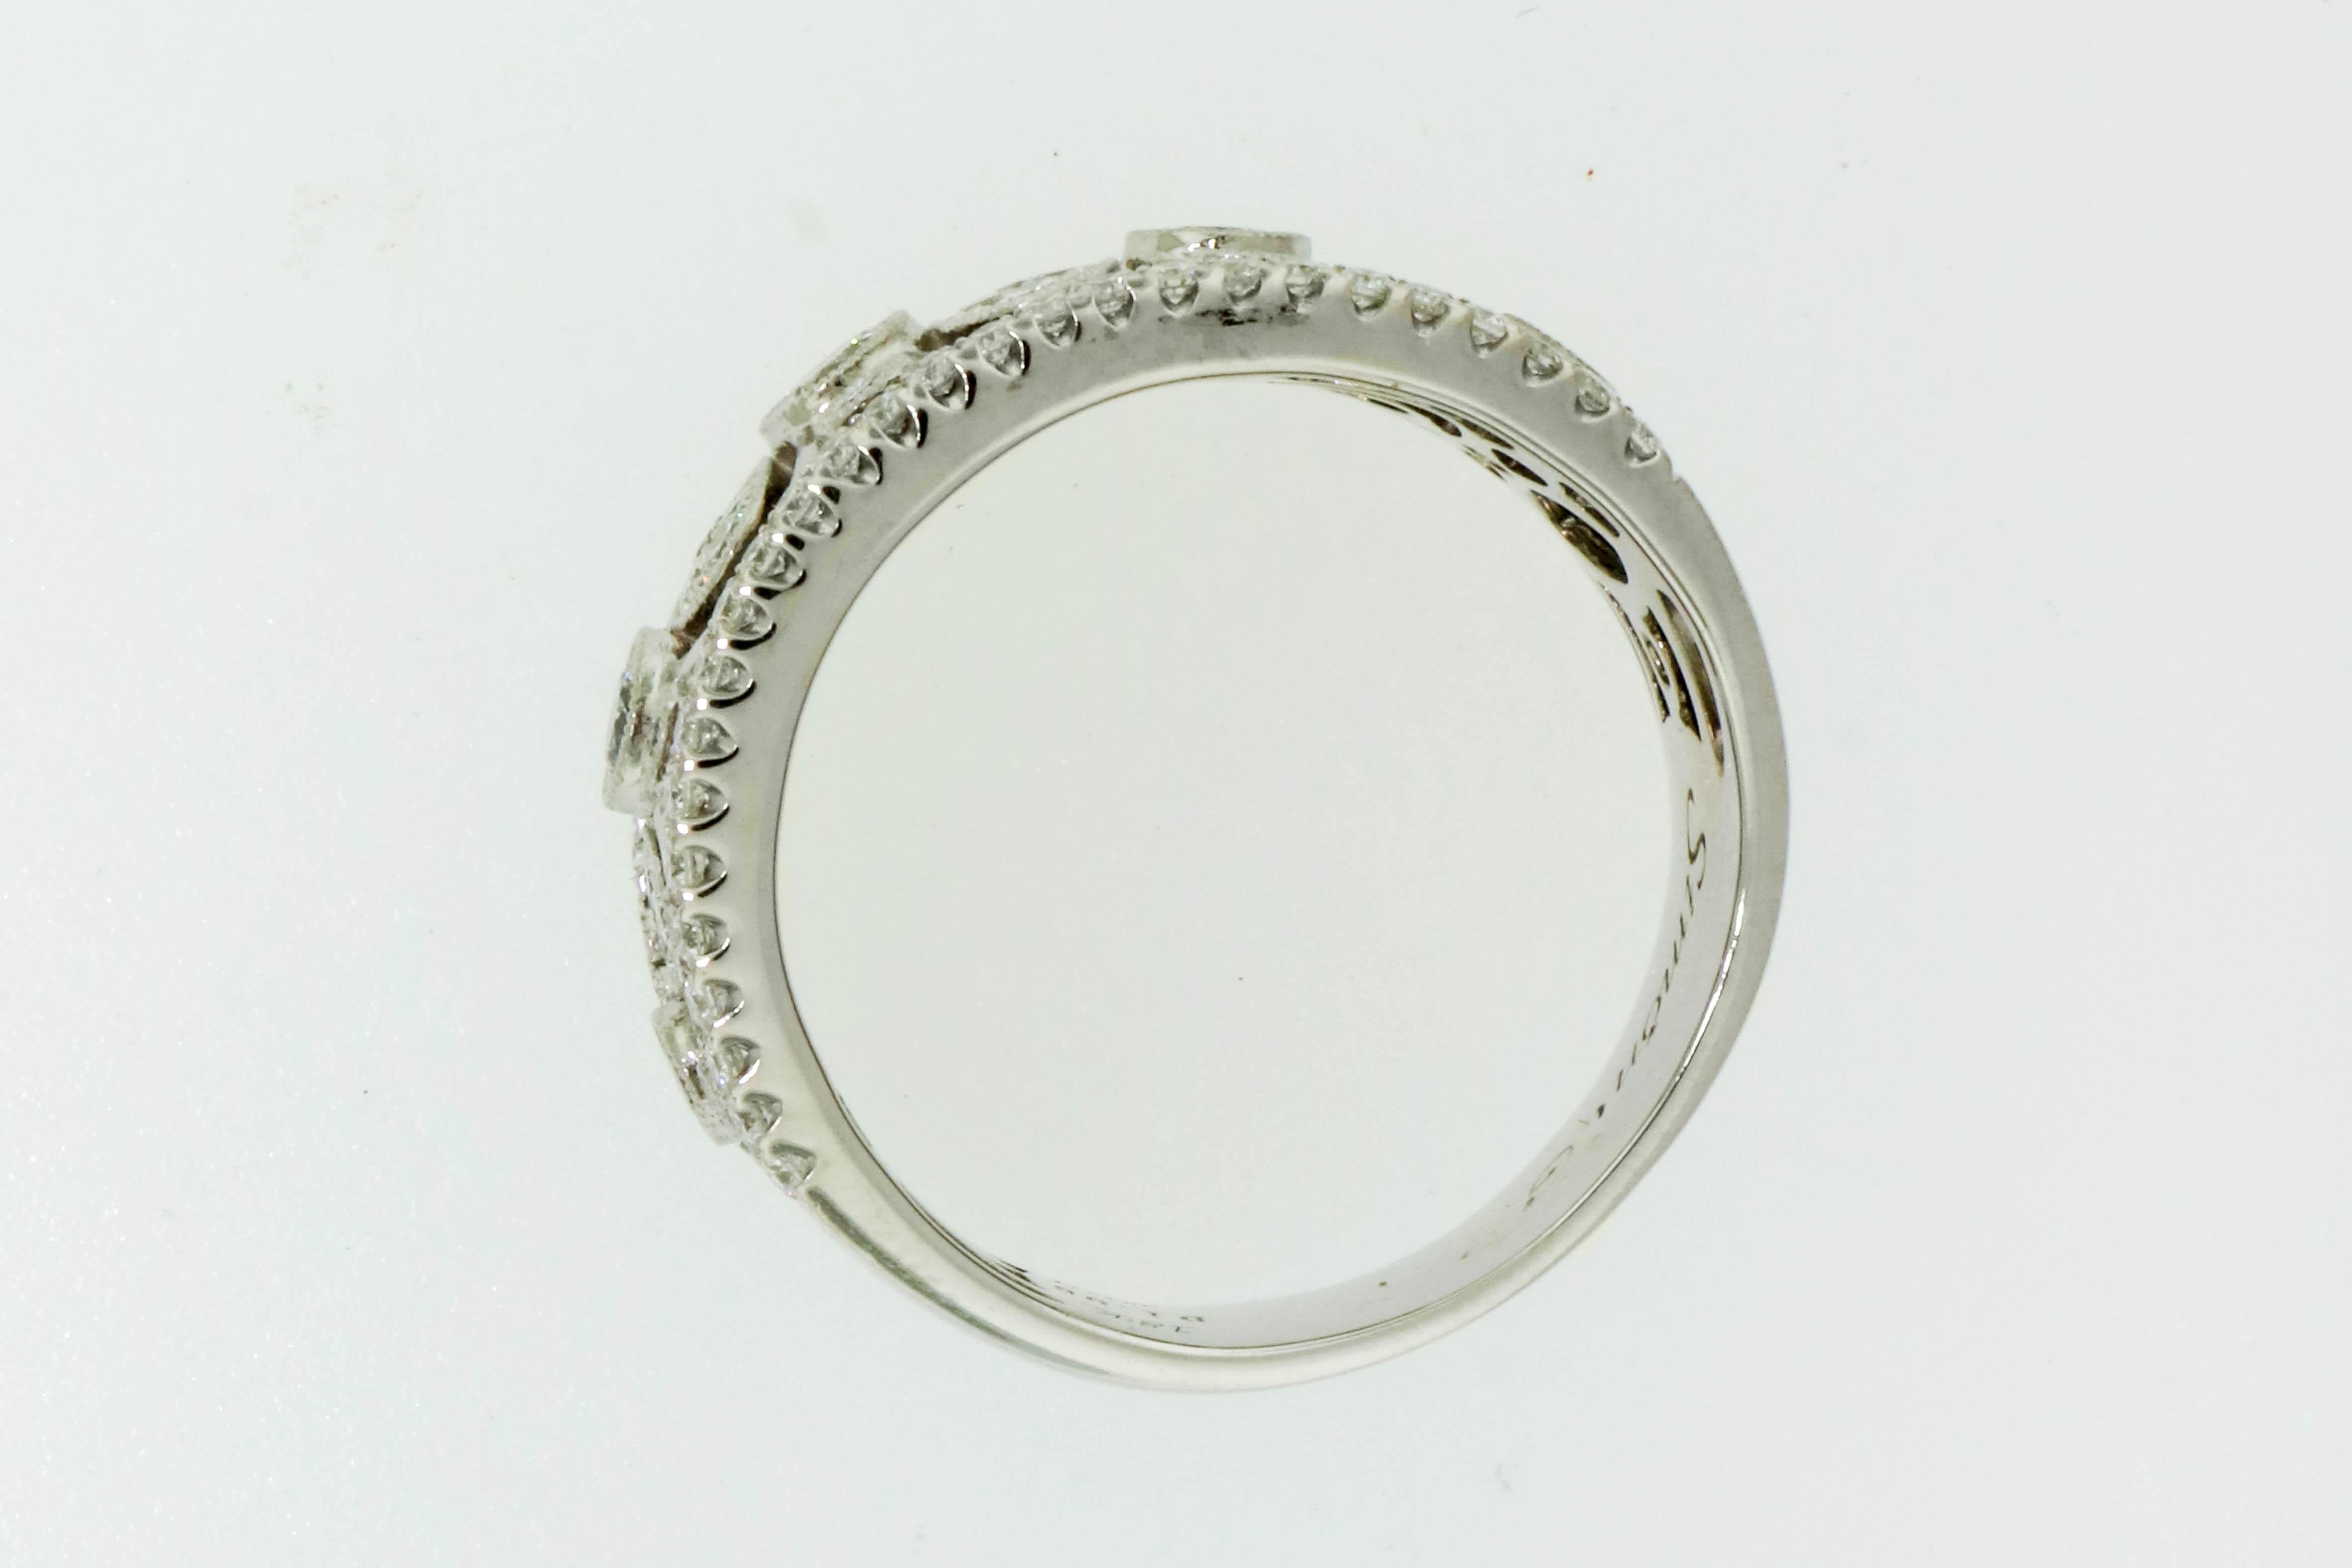 Round Cut Simon G. Explorer Diamond Wide Band Ring 18 Karat White Gold 1.05 Carat Total For Sale